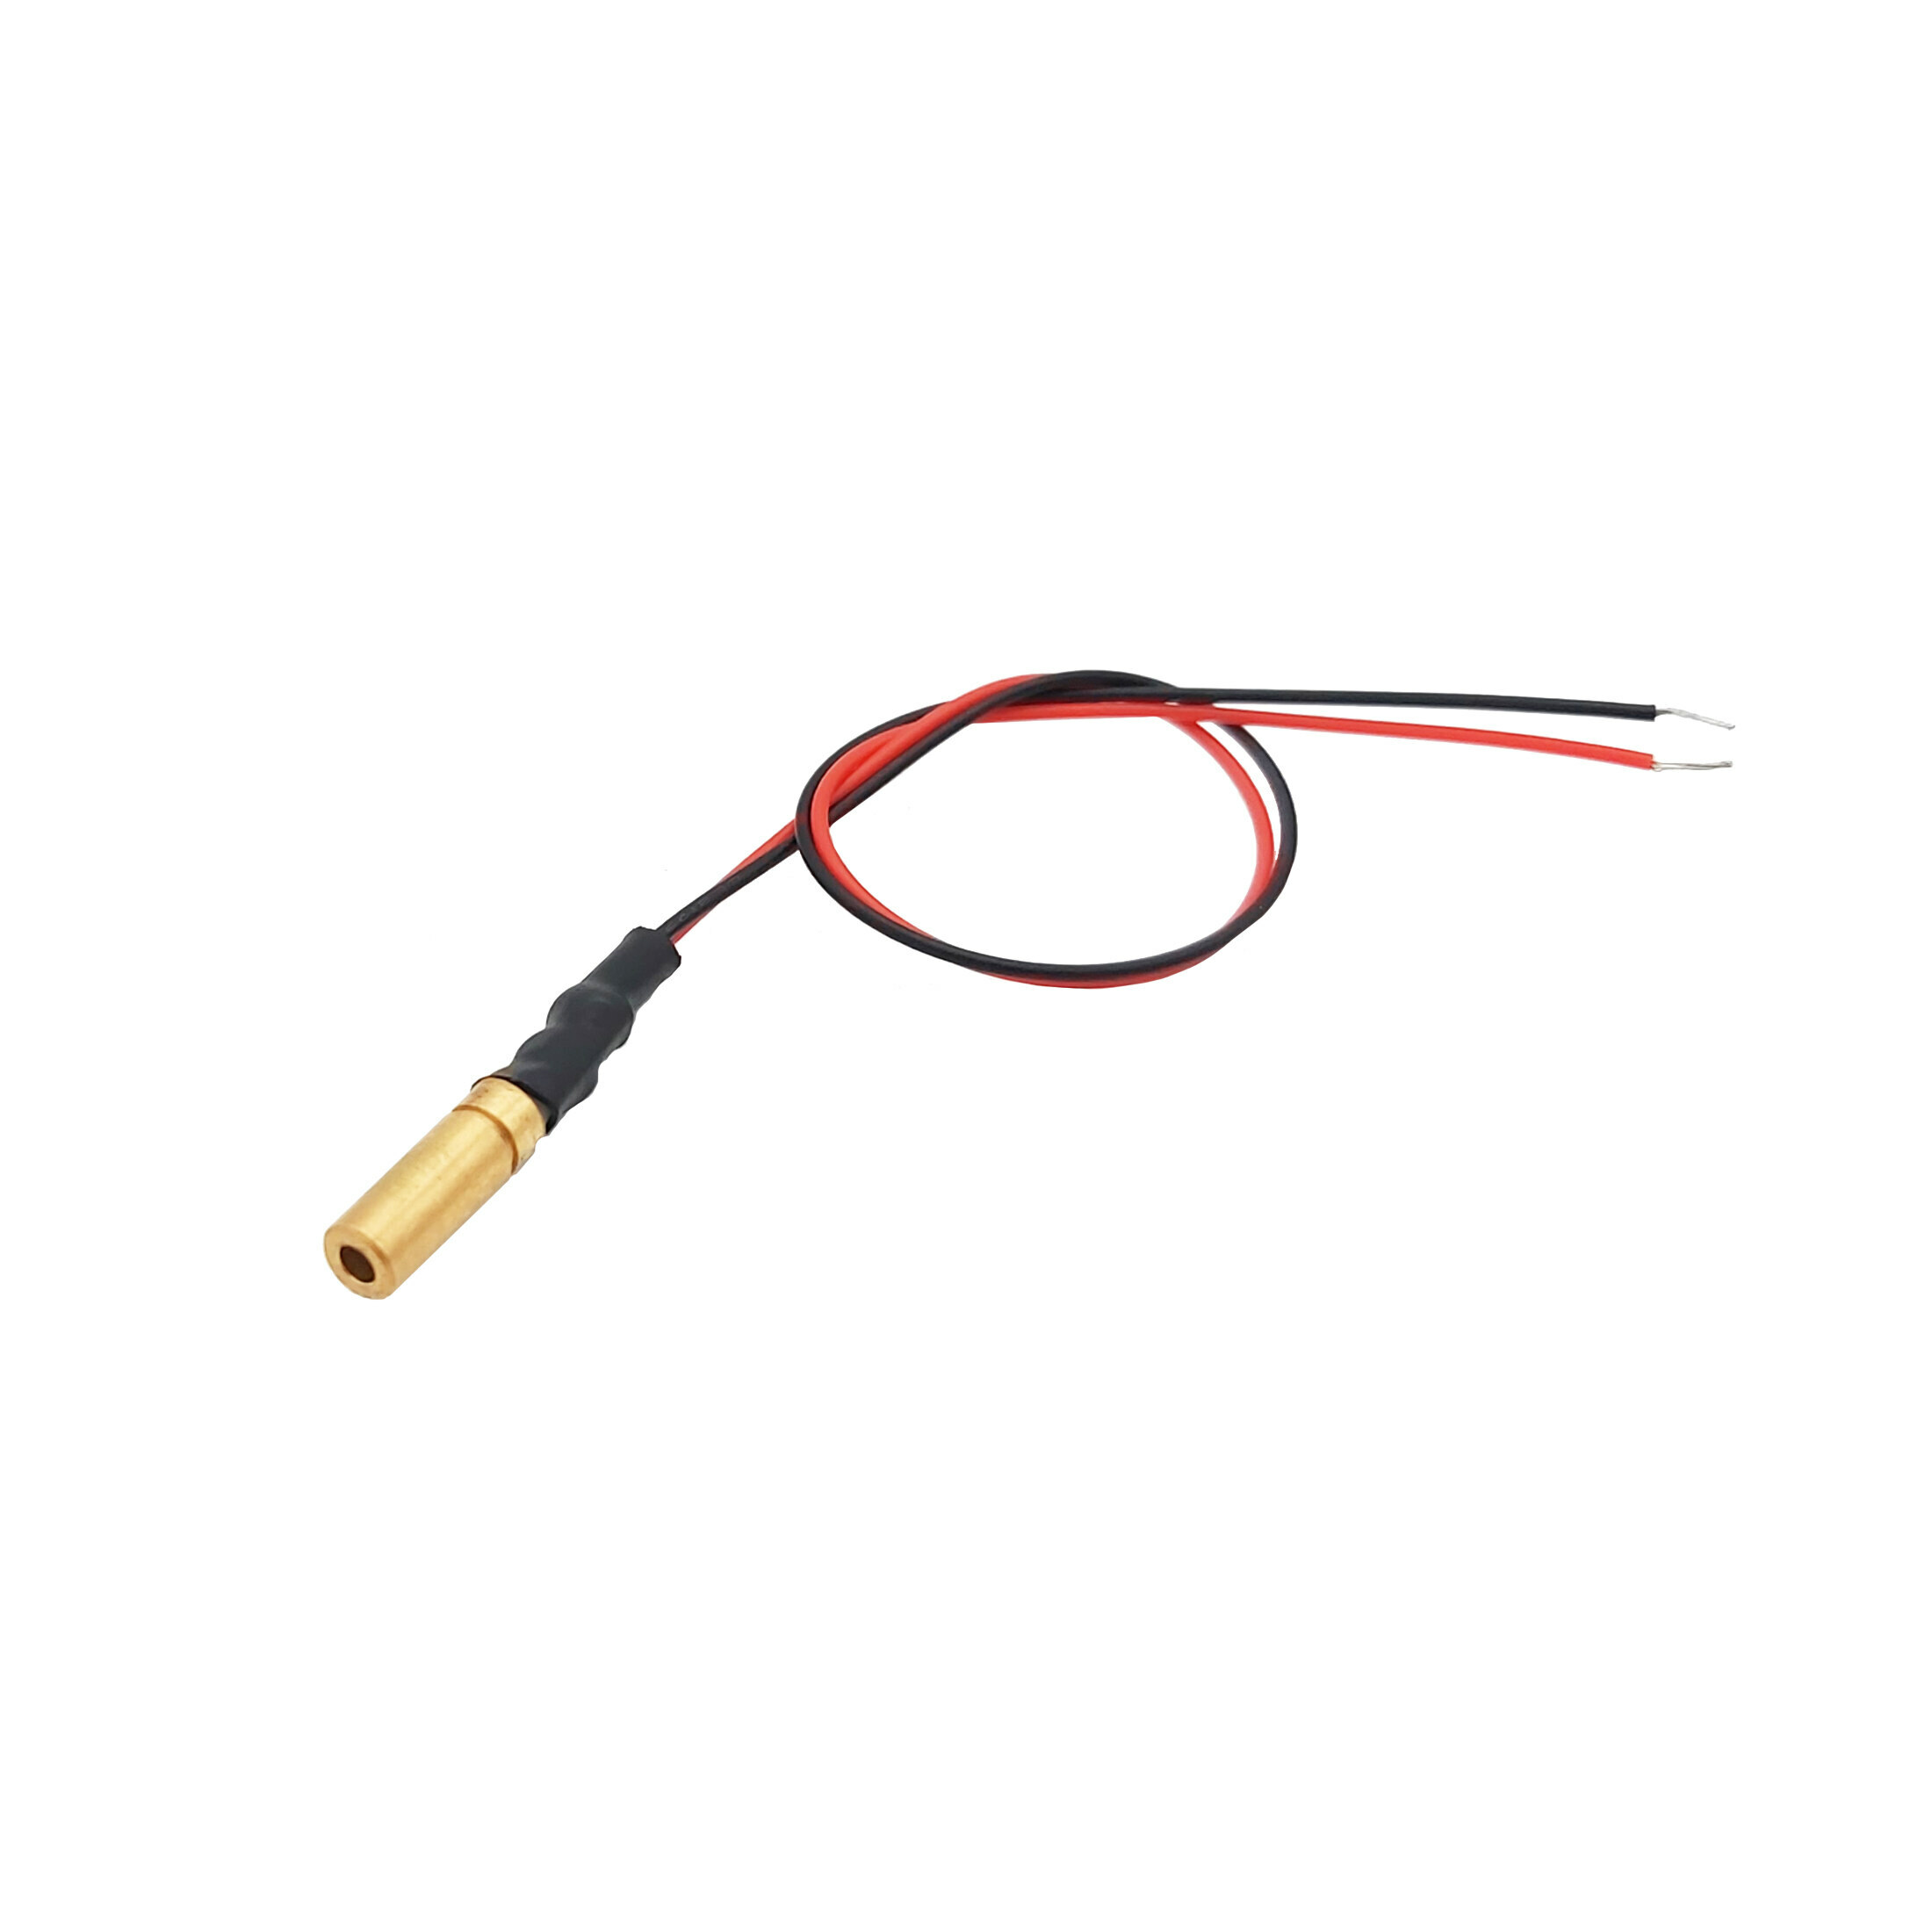 Dot laser, red, 650 nm, 1 mW, 3 V DC, Ø4x10 mm, Laser Class 2, Focus adjustable, Cable length 120 mm